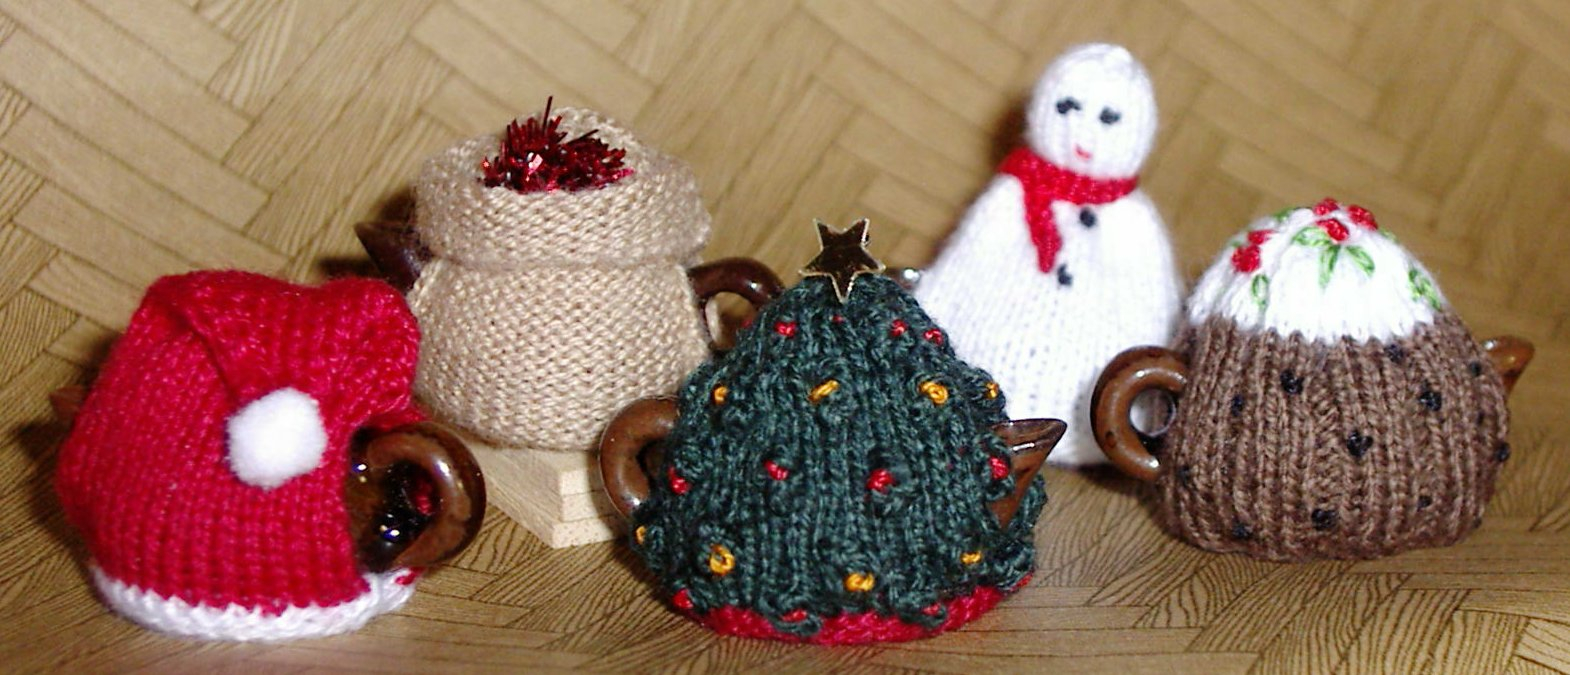 Tea Cozy Patterns To Knit Knitting Patterns For Tea Cosy Free Knitting Patterns